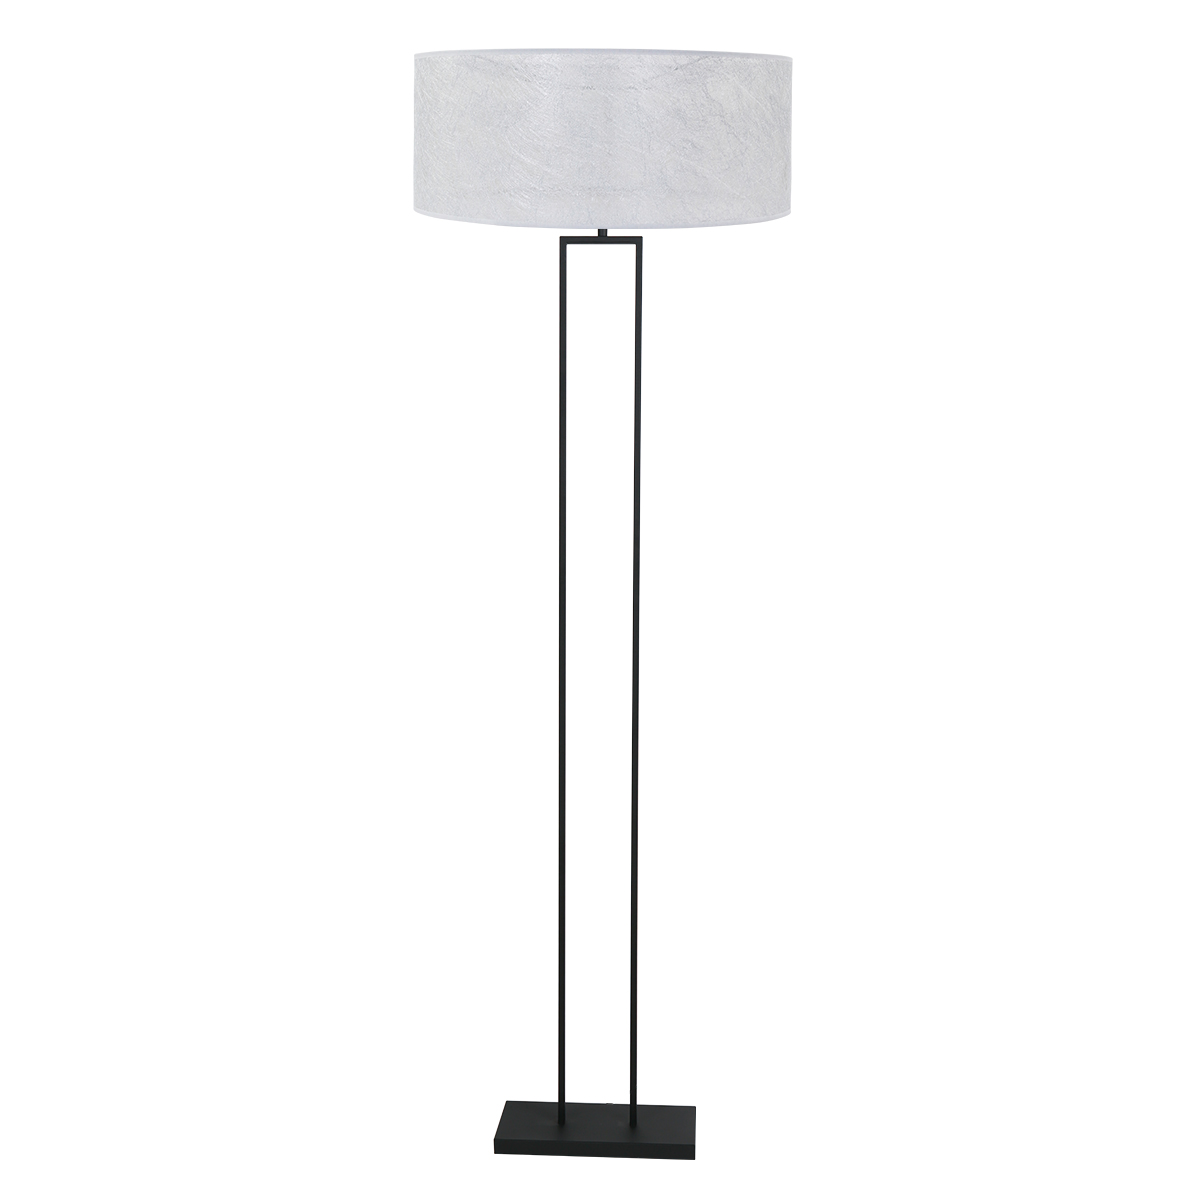 industriële-zwarte-vloerlamp-met-witte-lampenkap-steinhauer-stang-3850zw